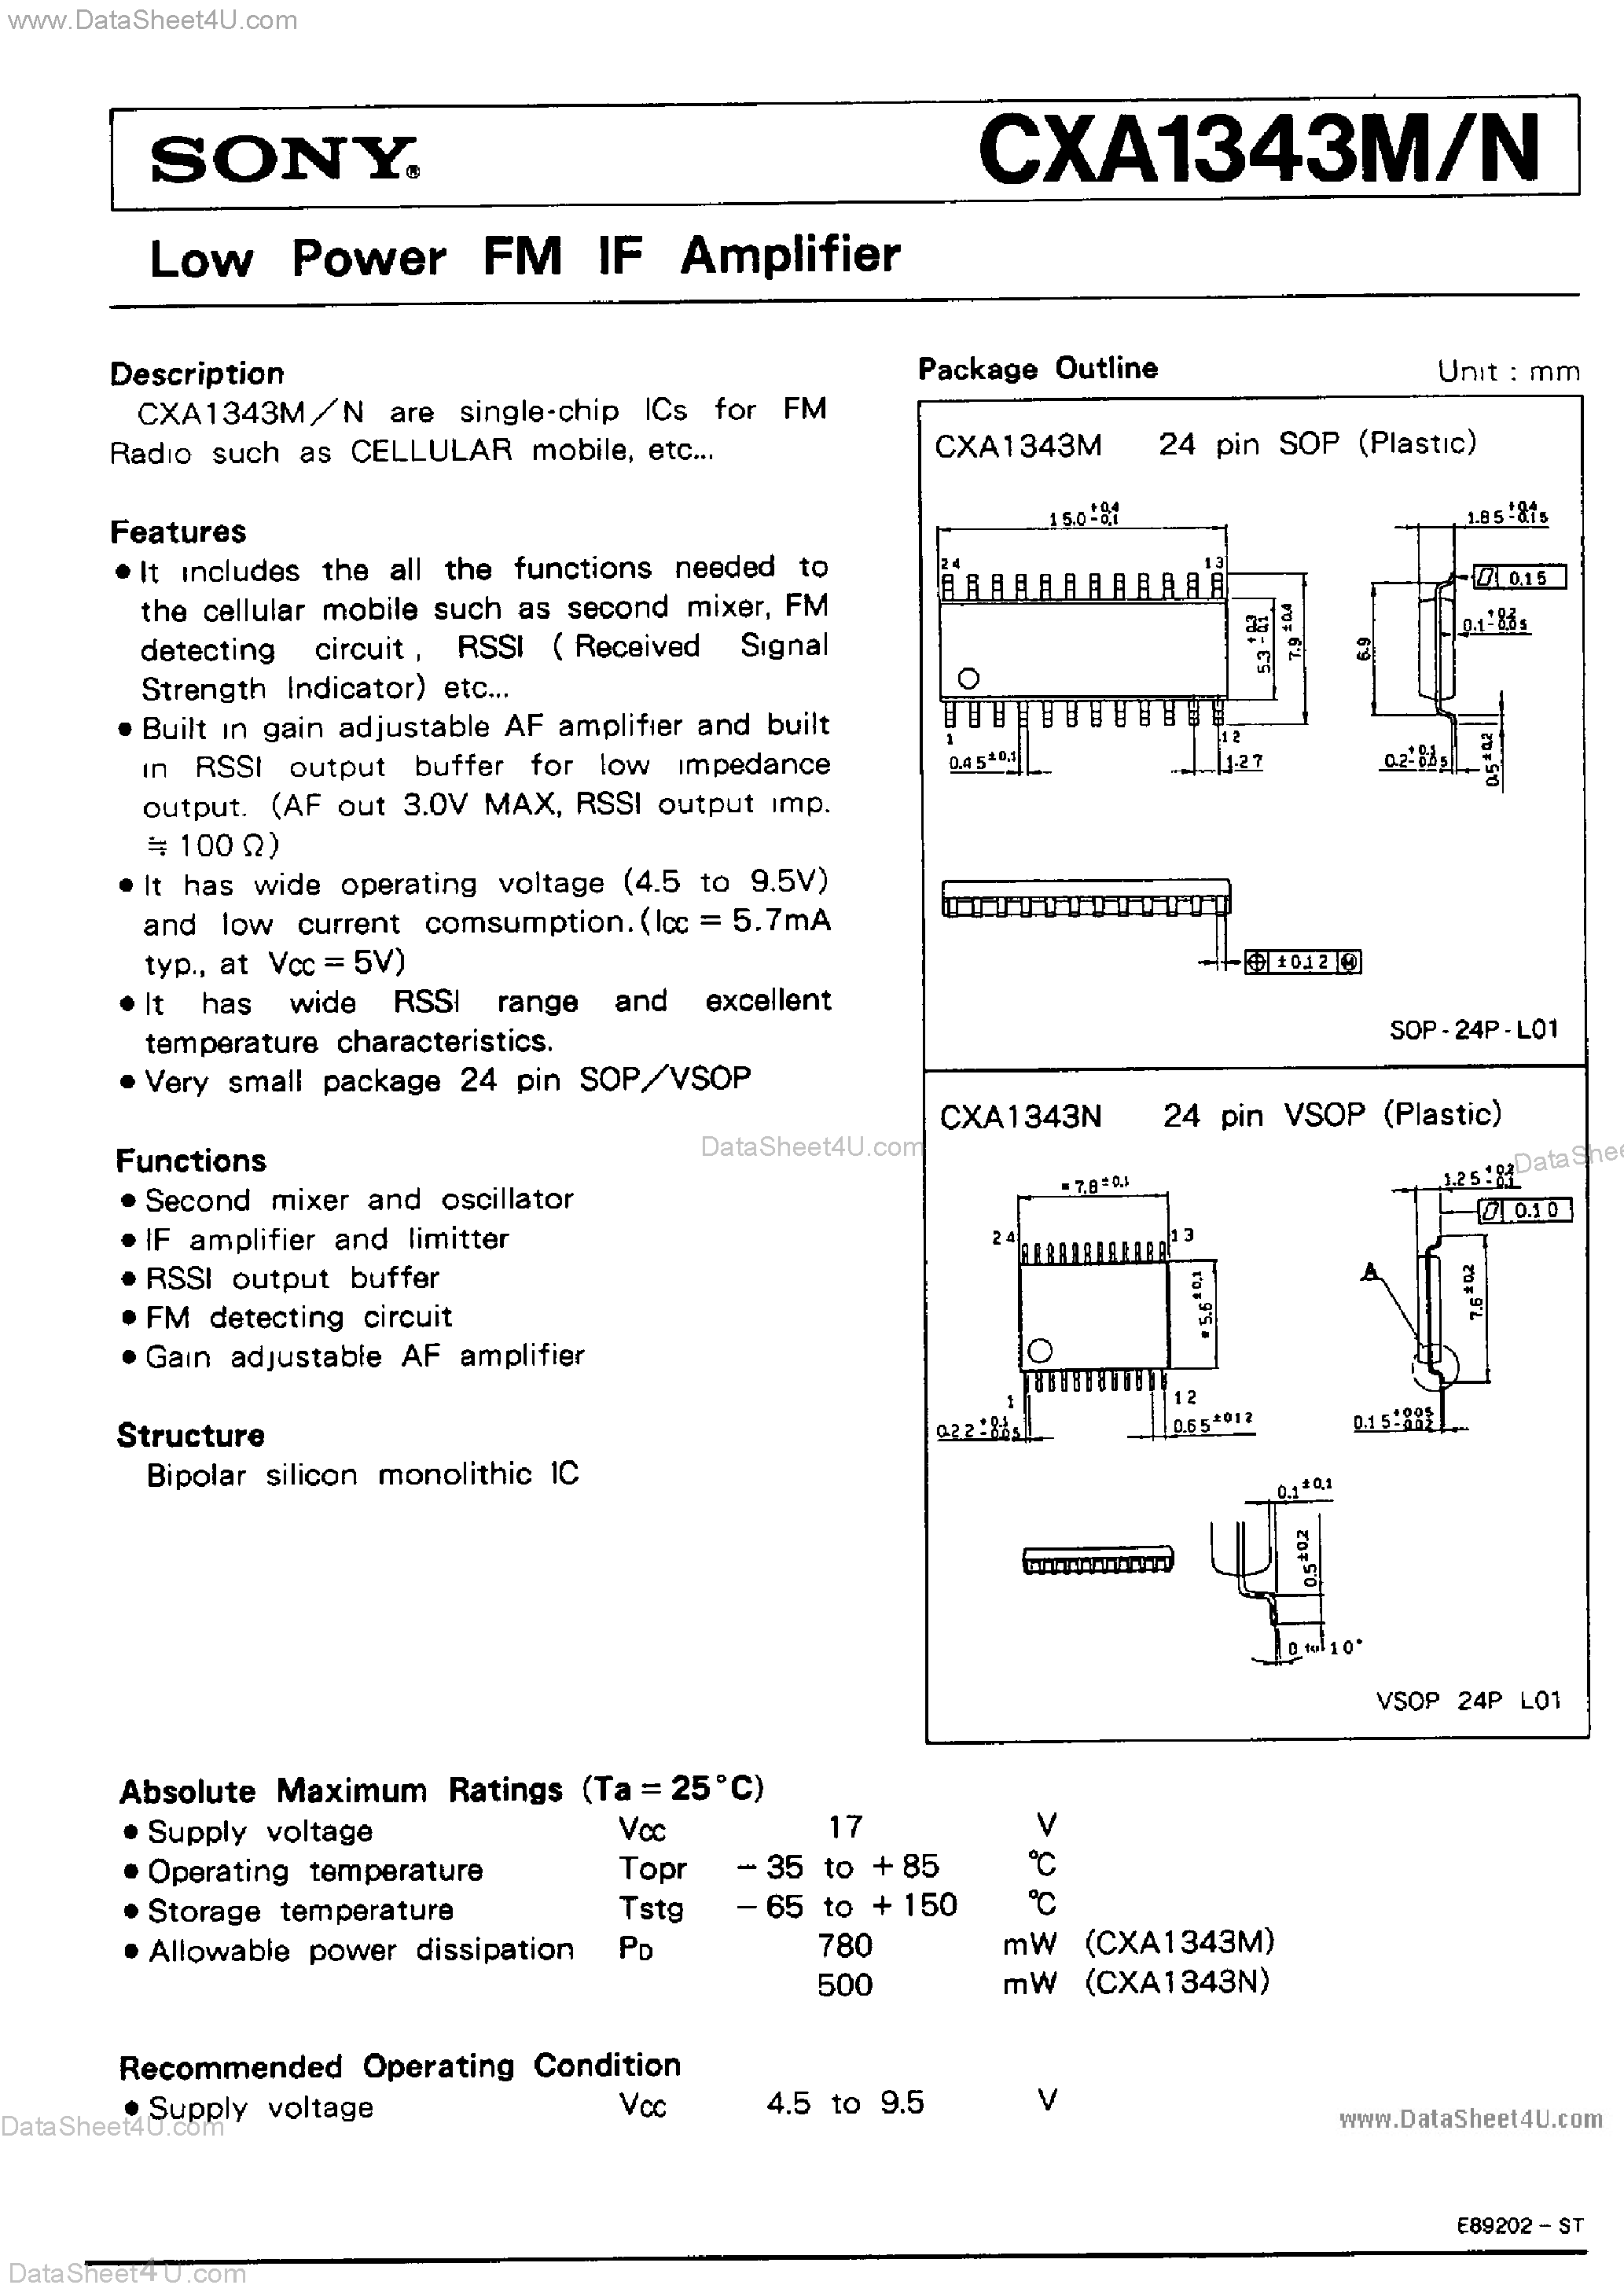 Datasheet CXA1343M - Low Power FM IF Amplifier page 1